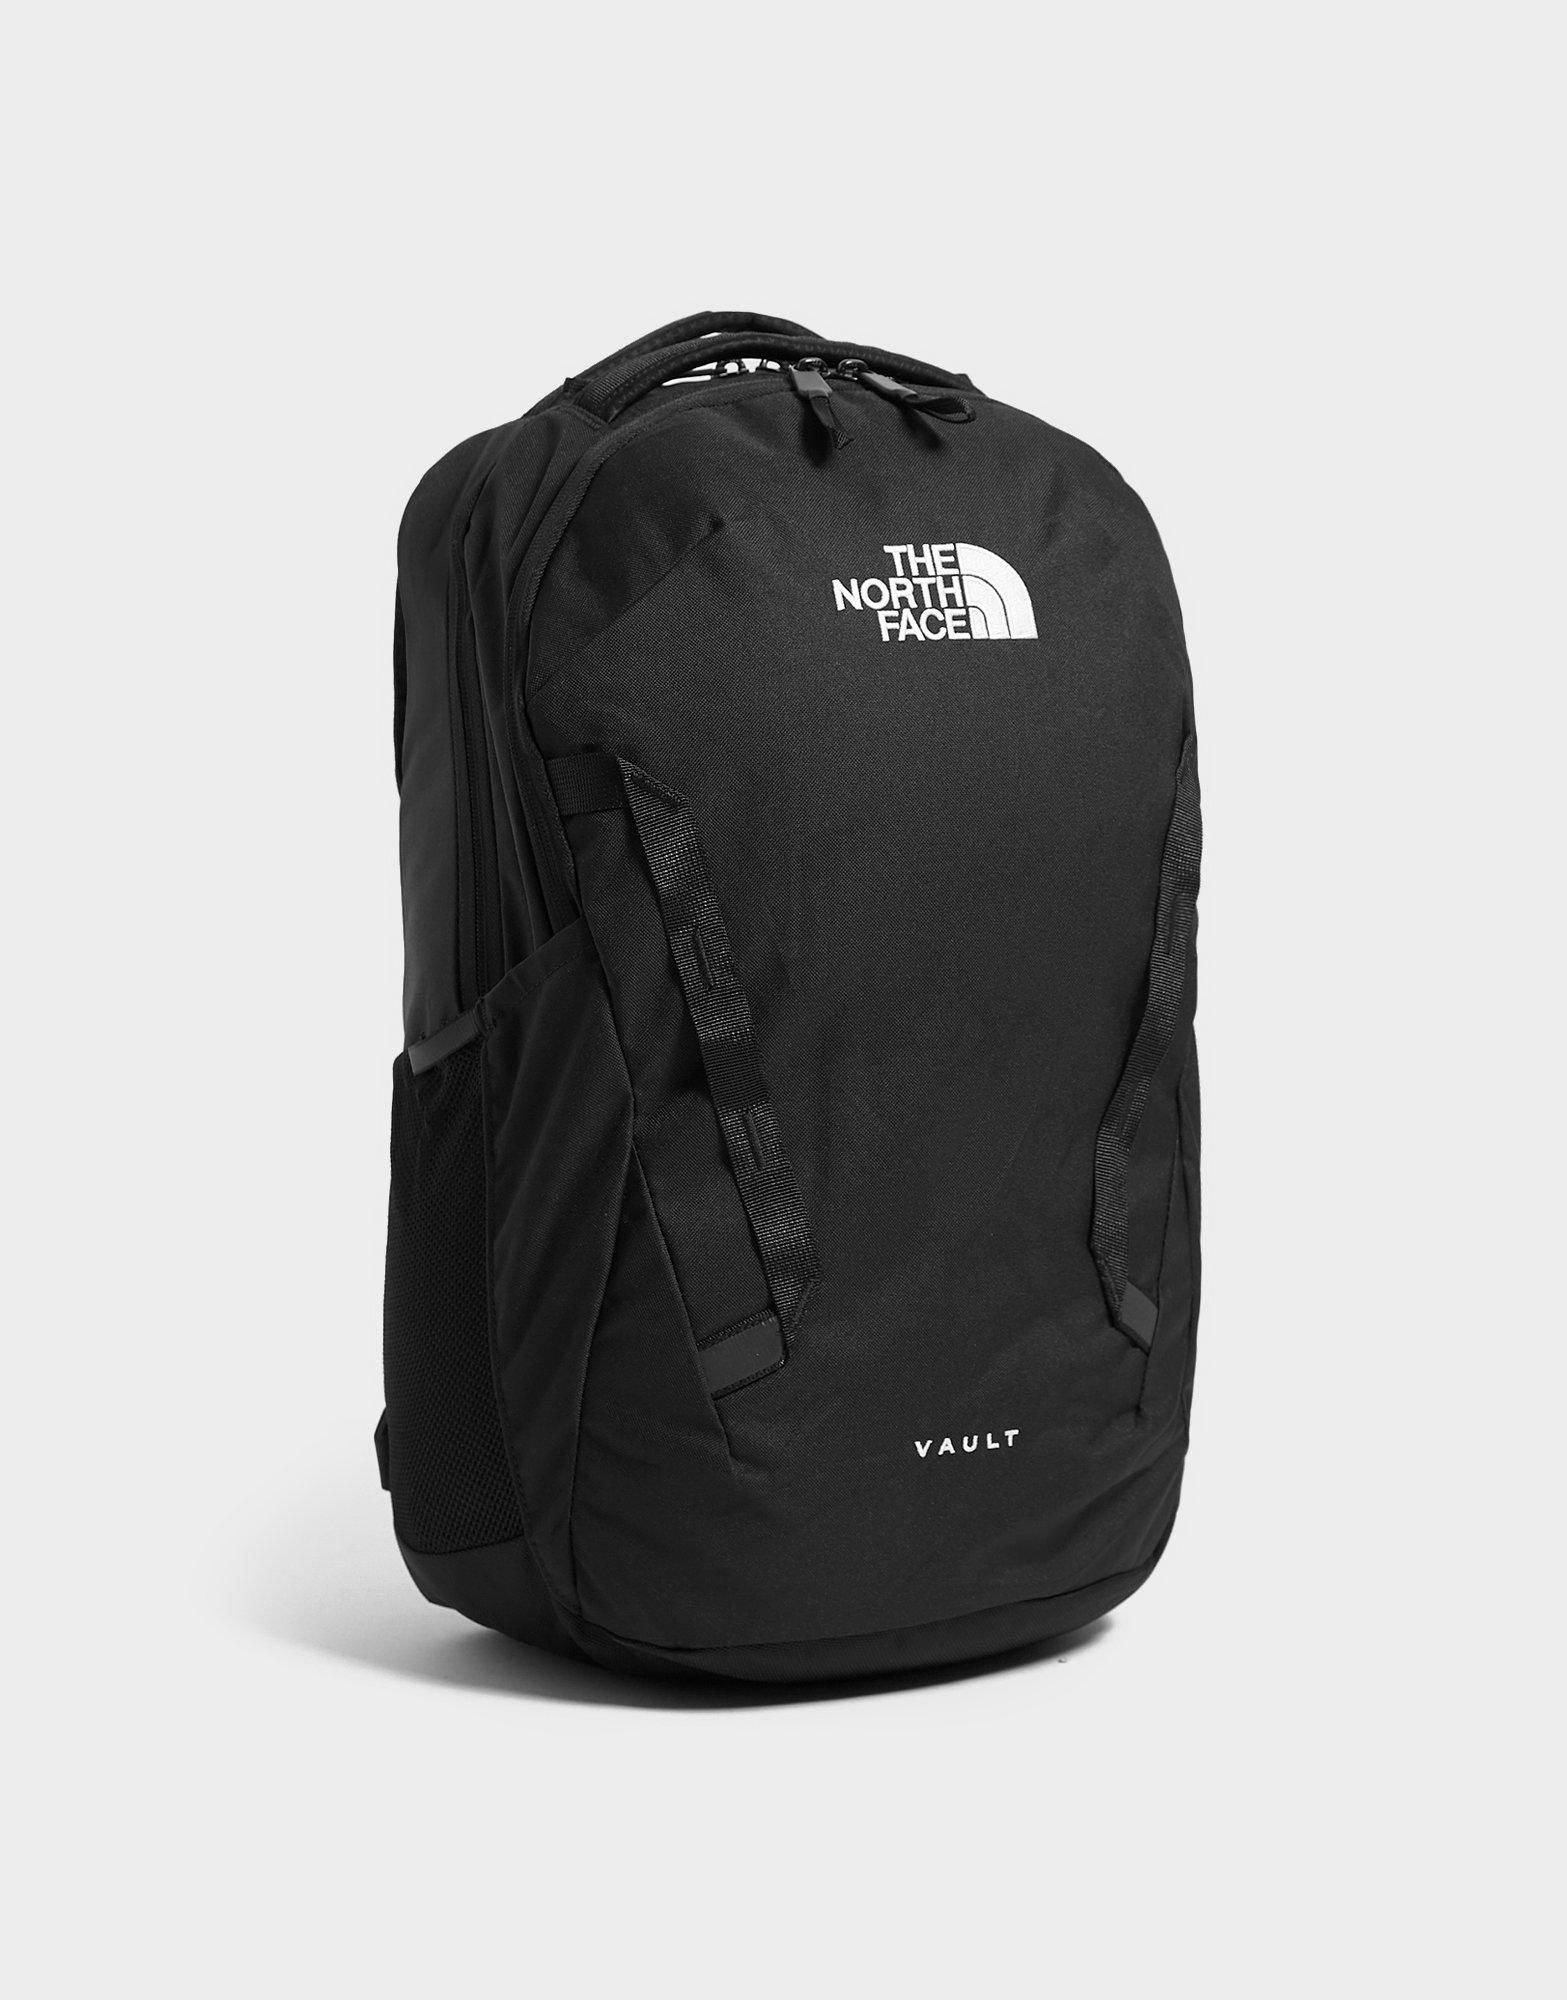 north face vault backpack sale